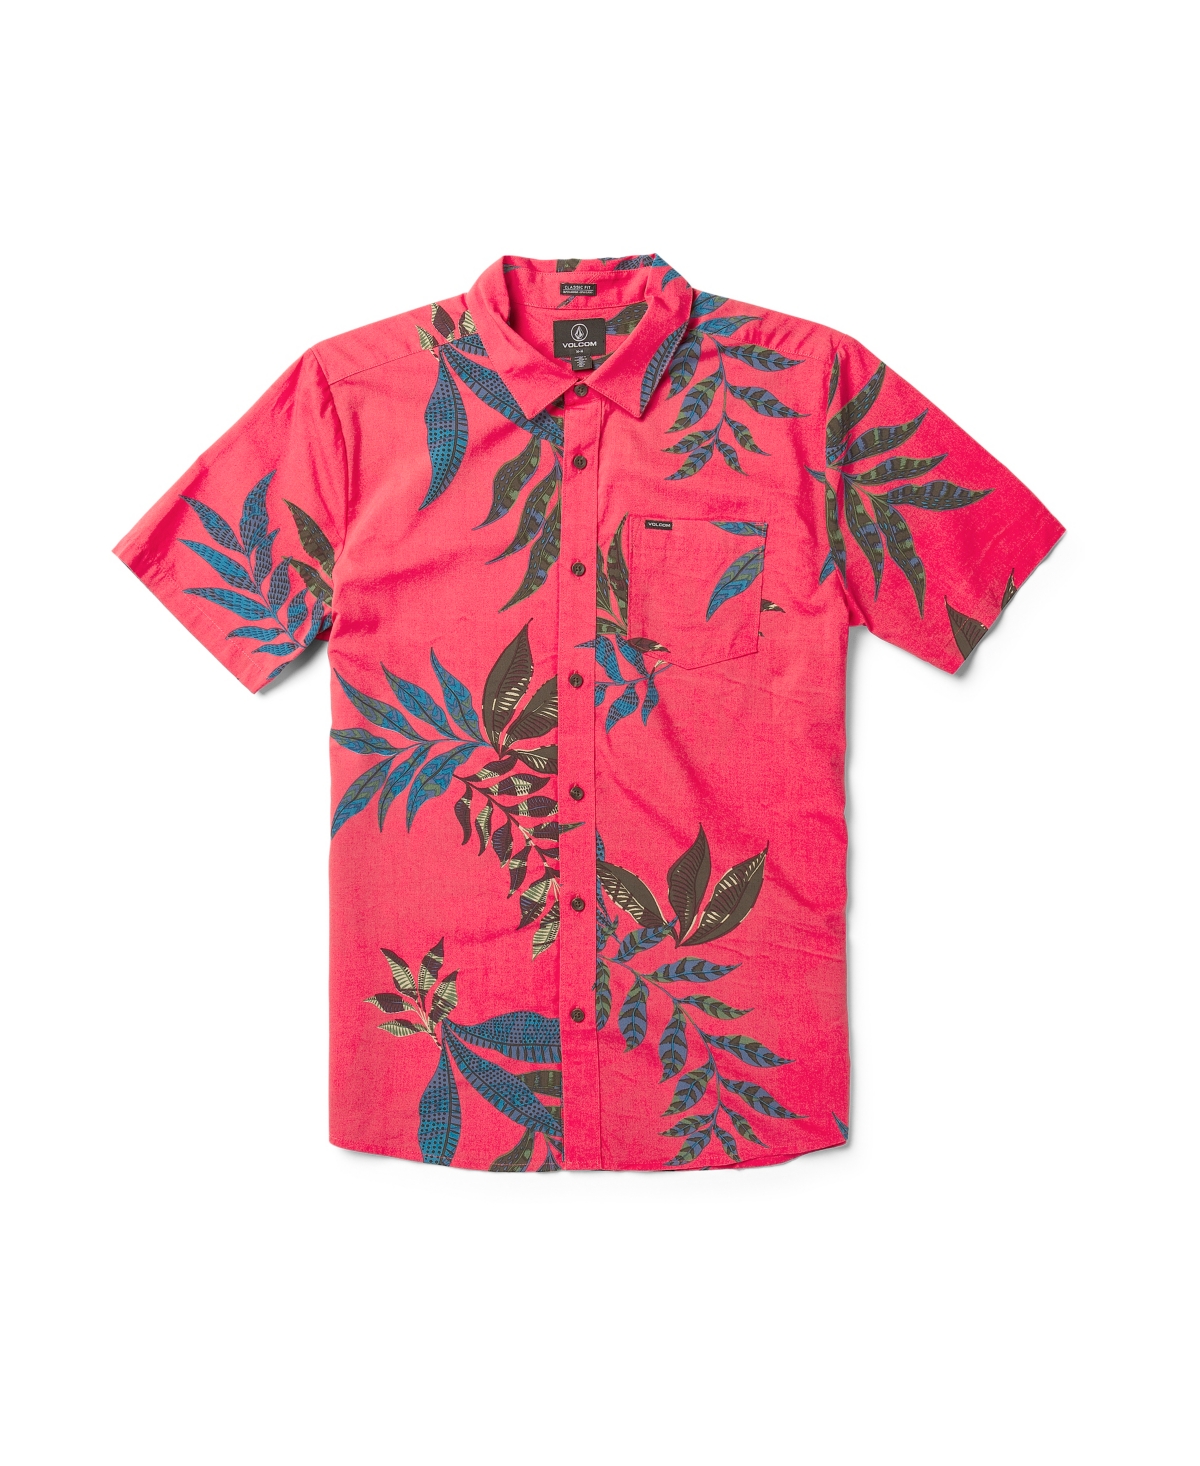 Men's Paradiso Floral Short Sleeve Shirt - Washed Ruby